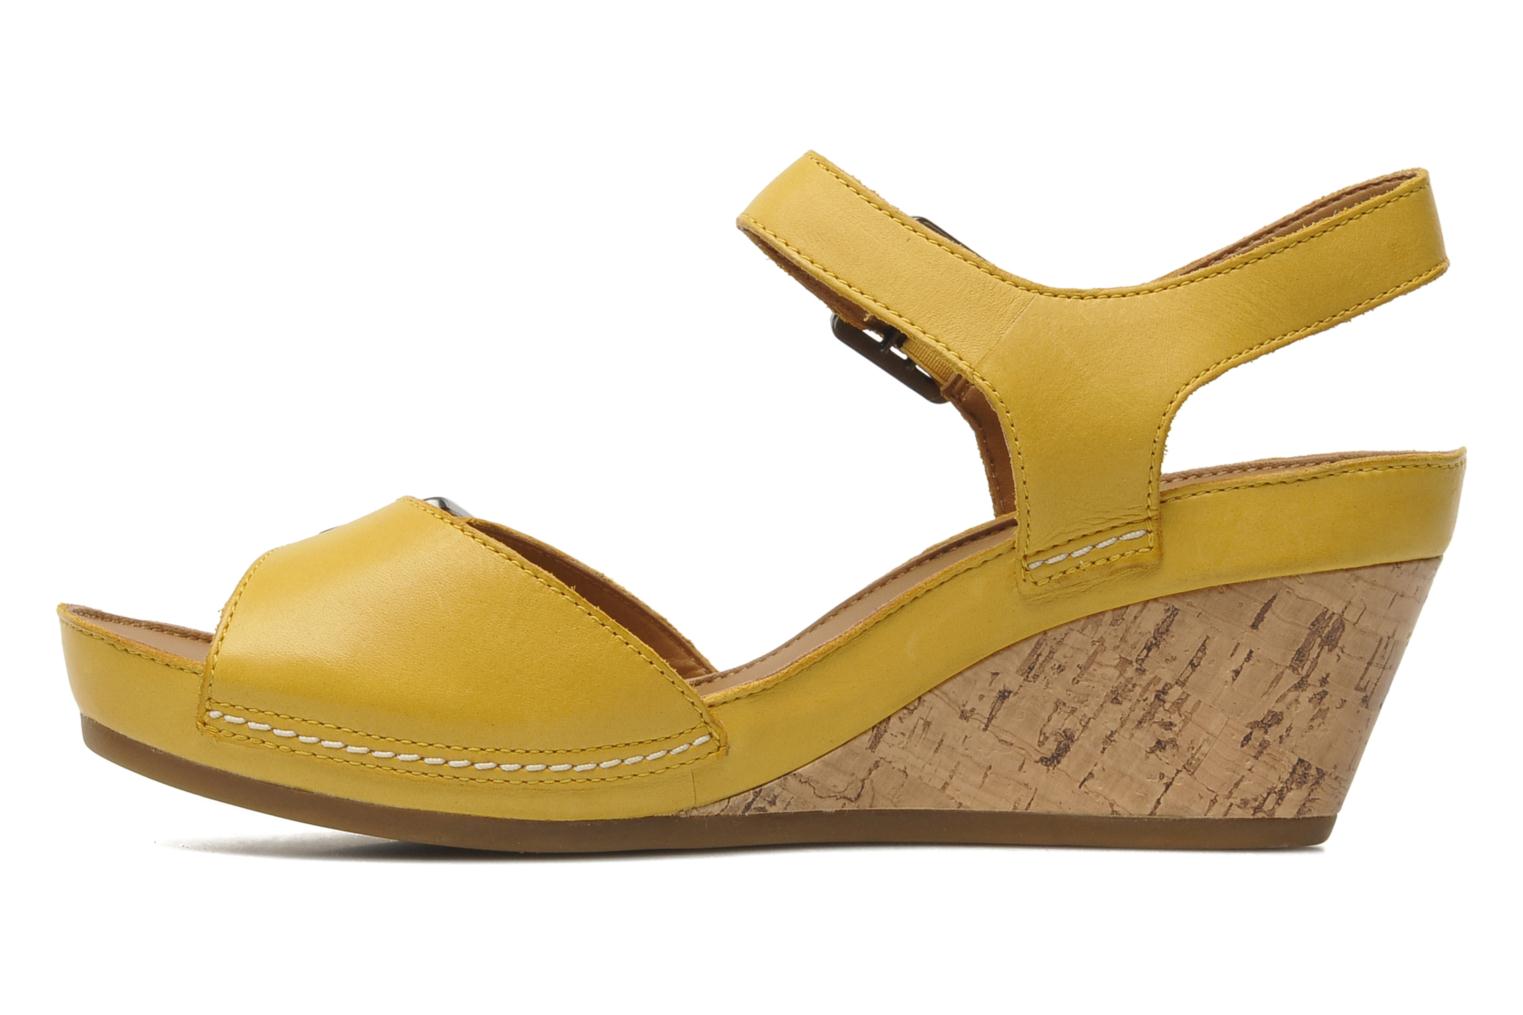 clarks sandals yellow